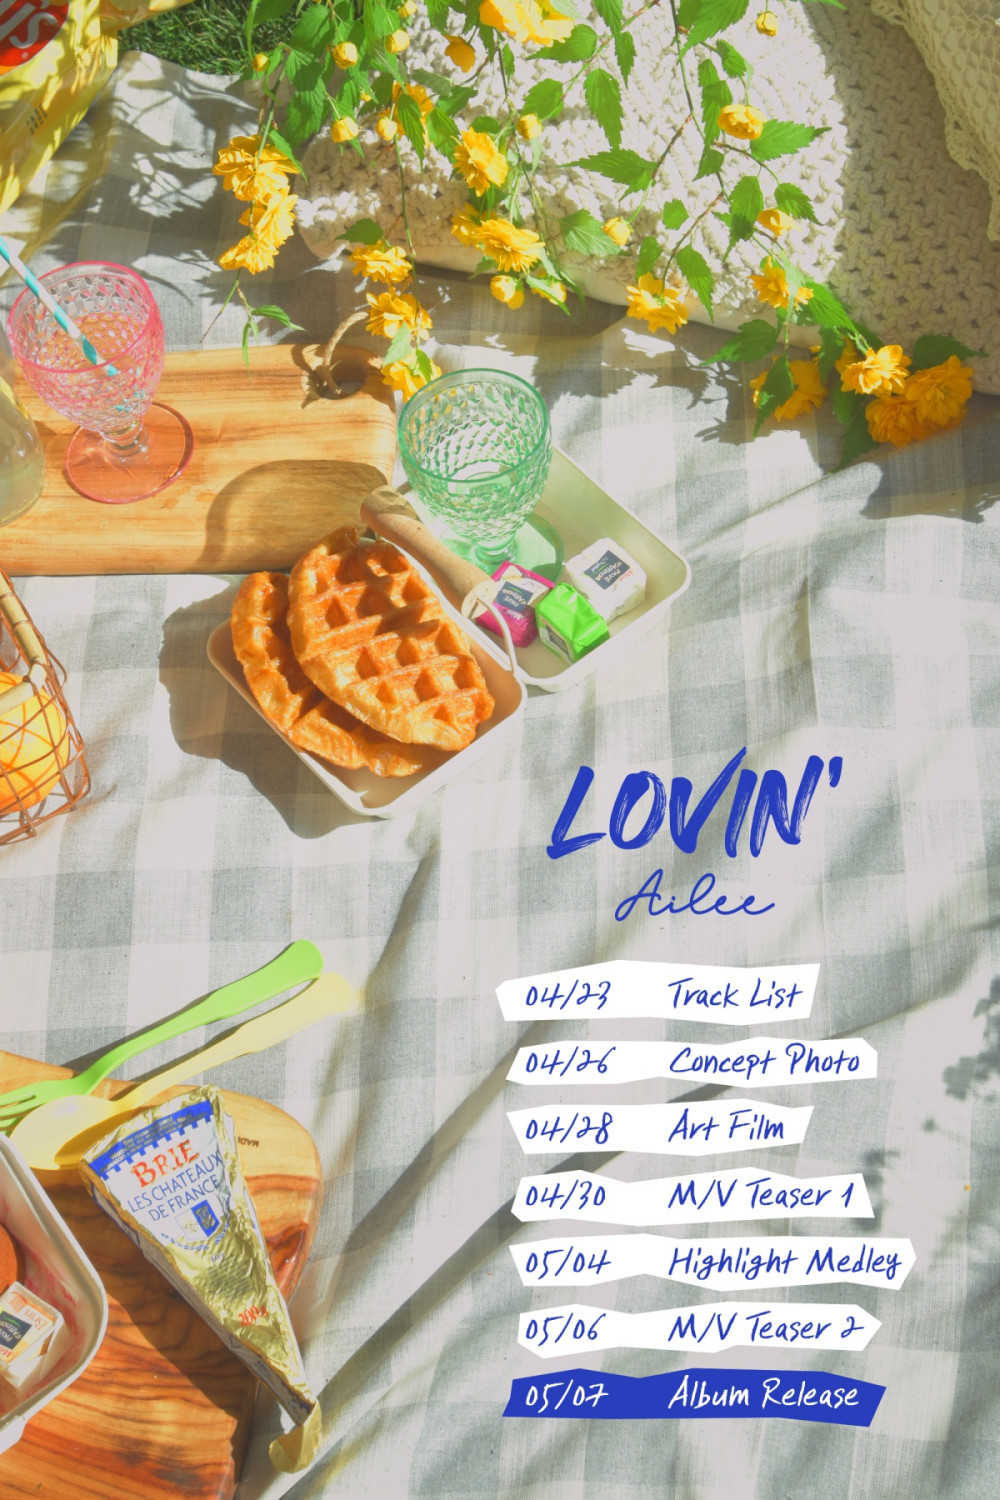 [Камбэк] Ailee альбом "LOVIN": музыкальный клип "Make Up Your Mind"